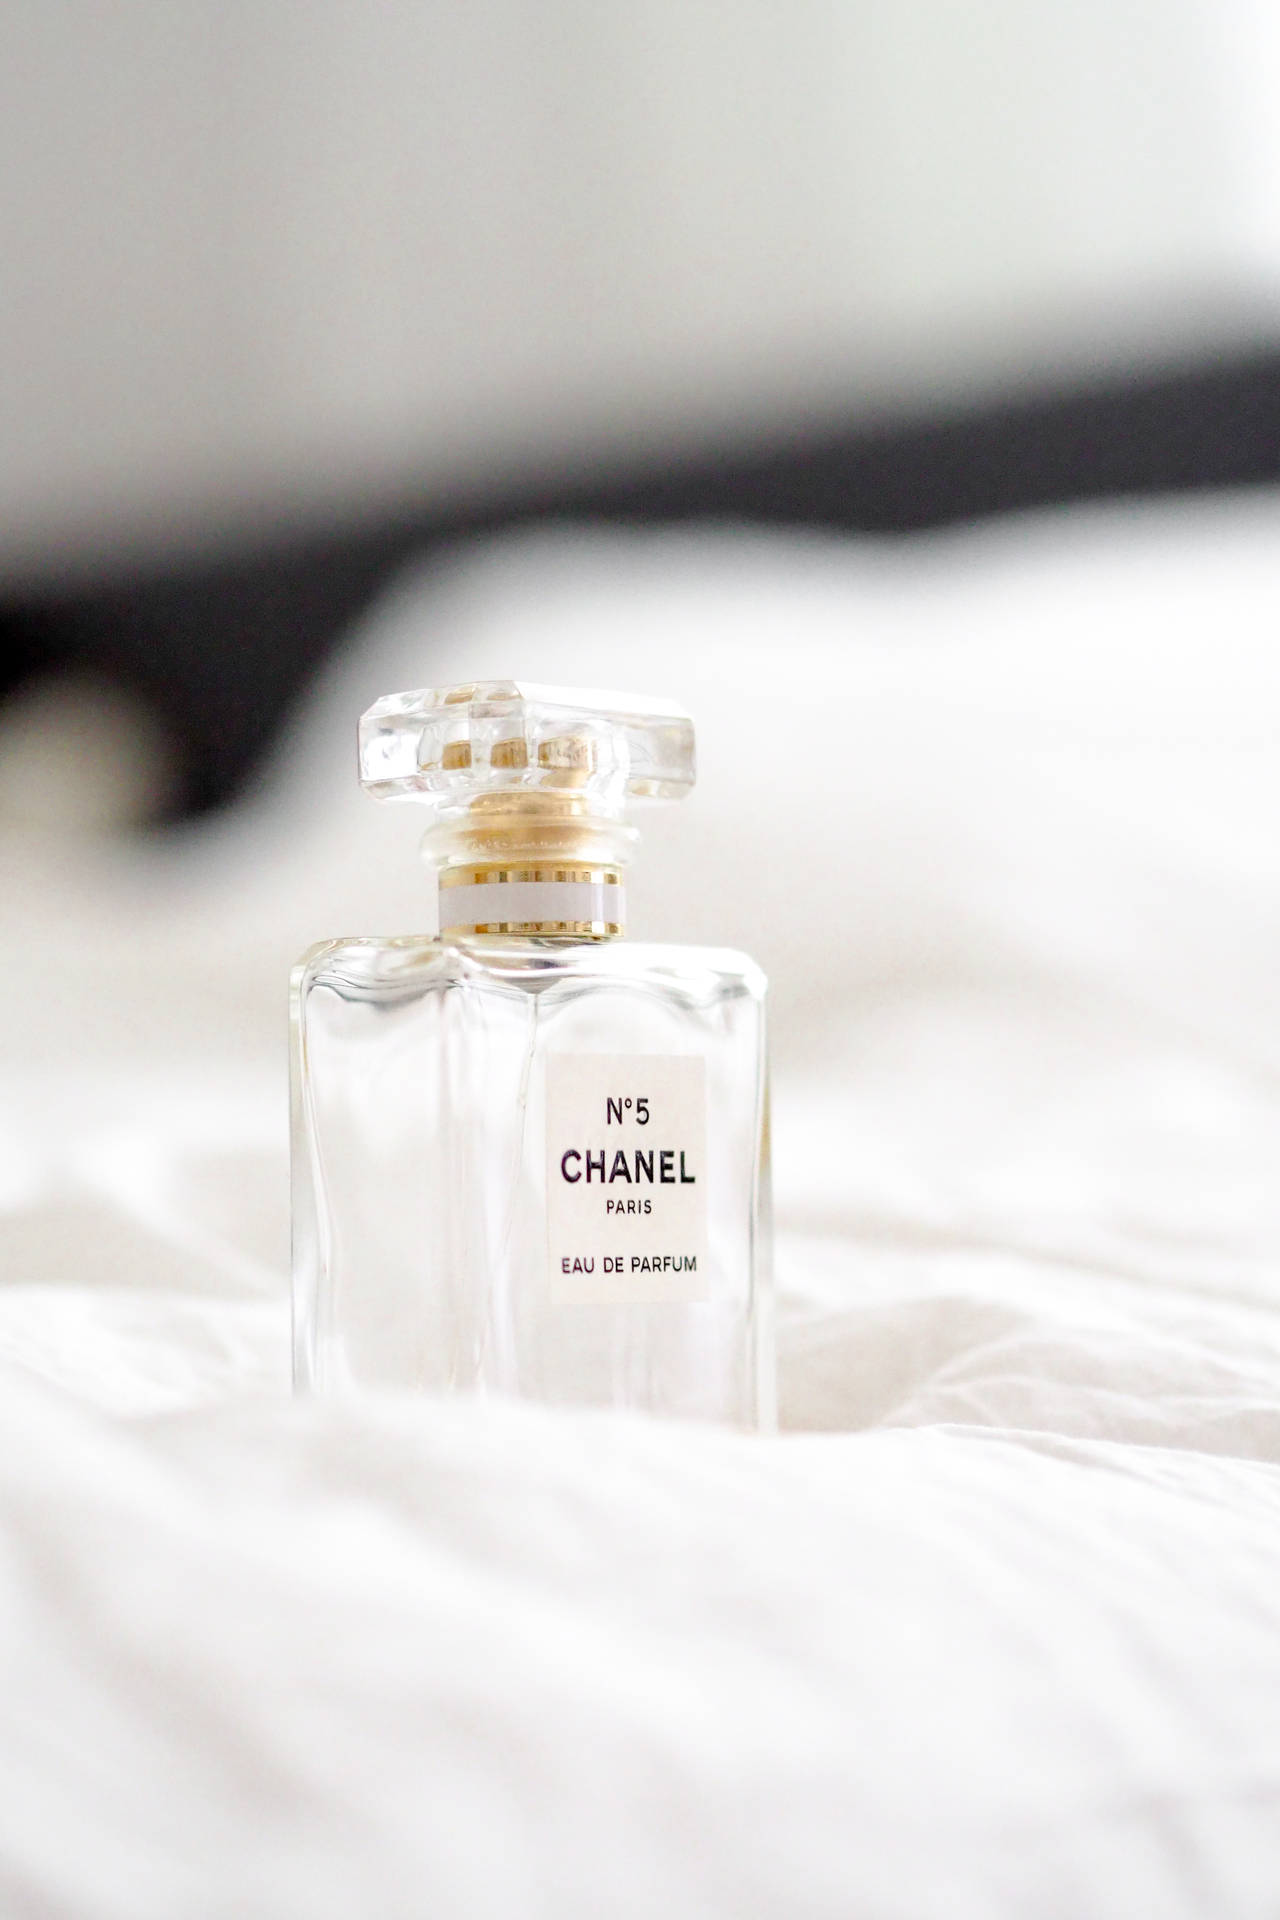 Chanel No. 5 Perfume Bottle Background